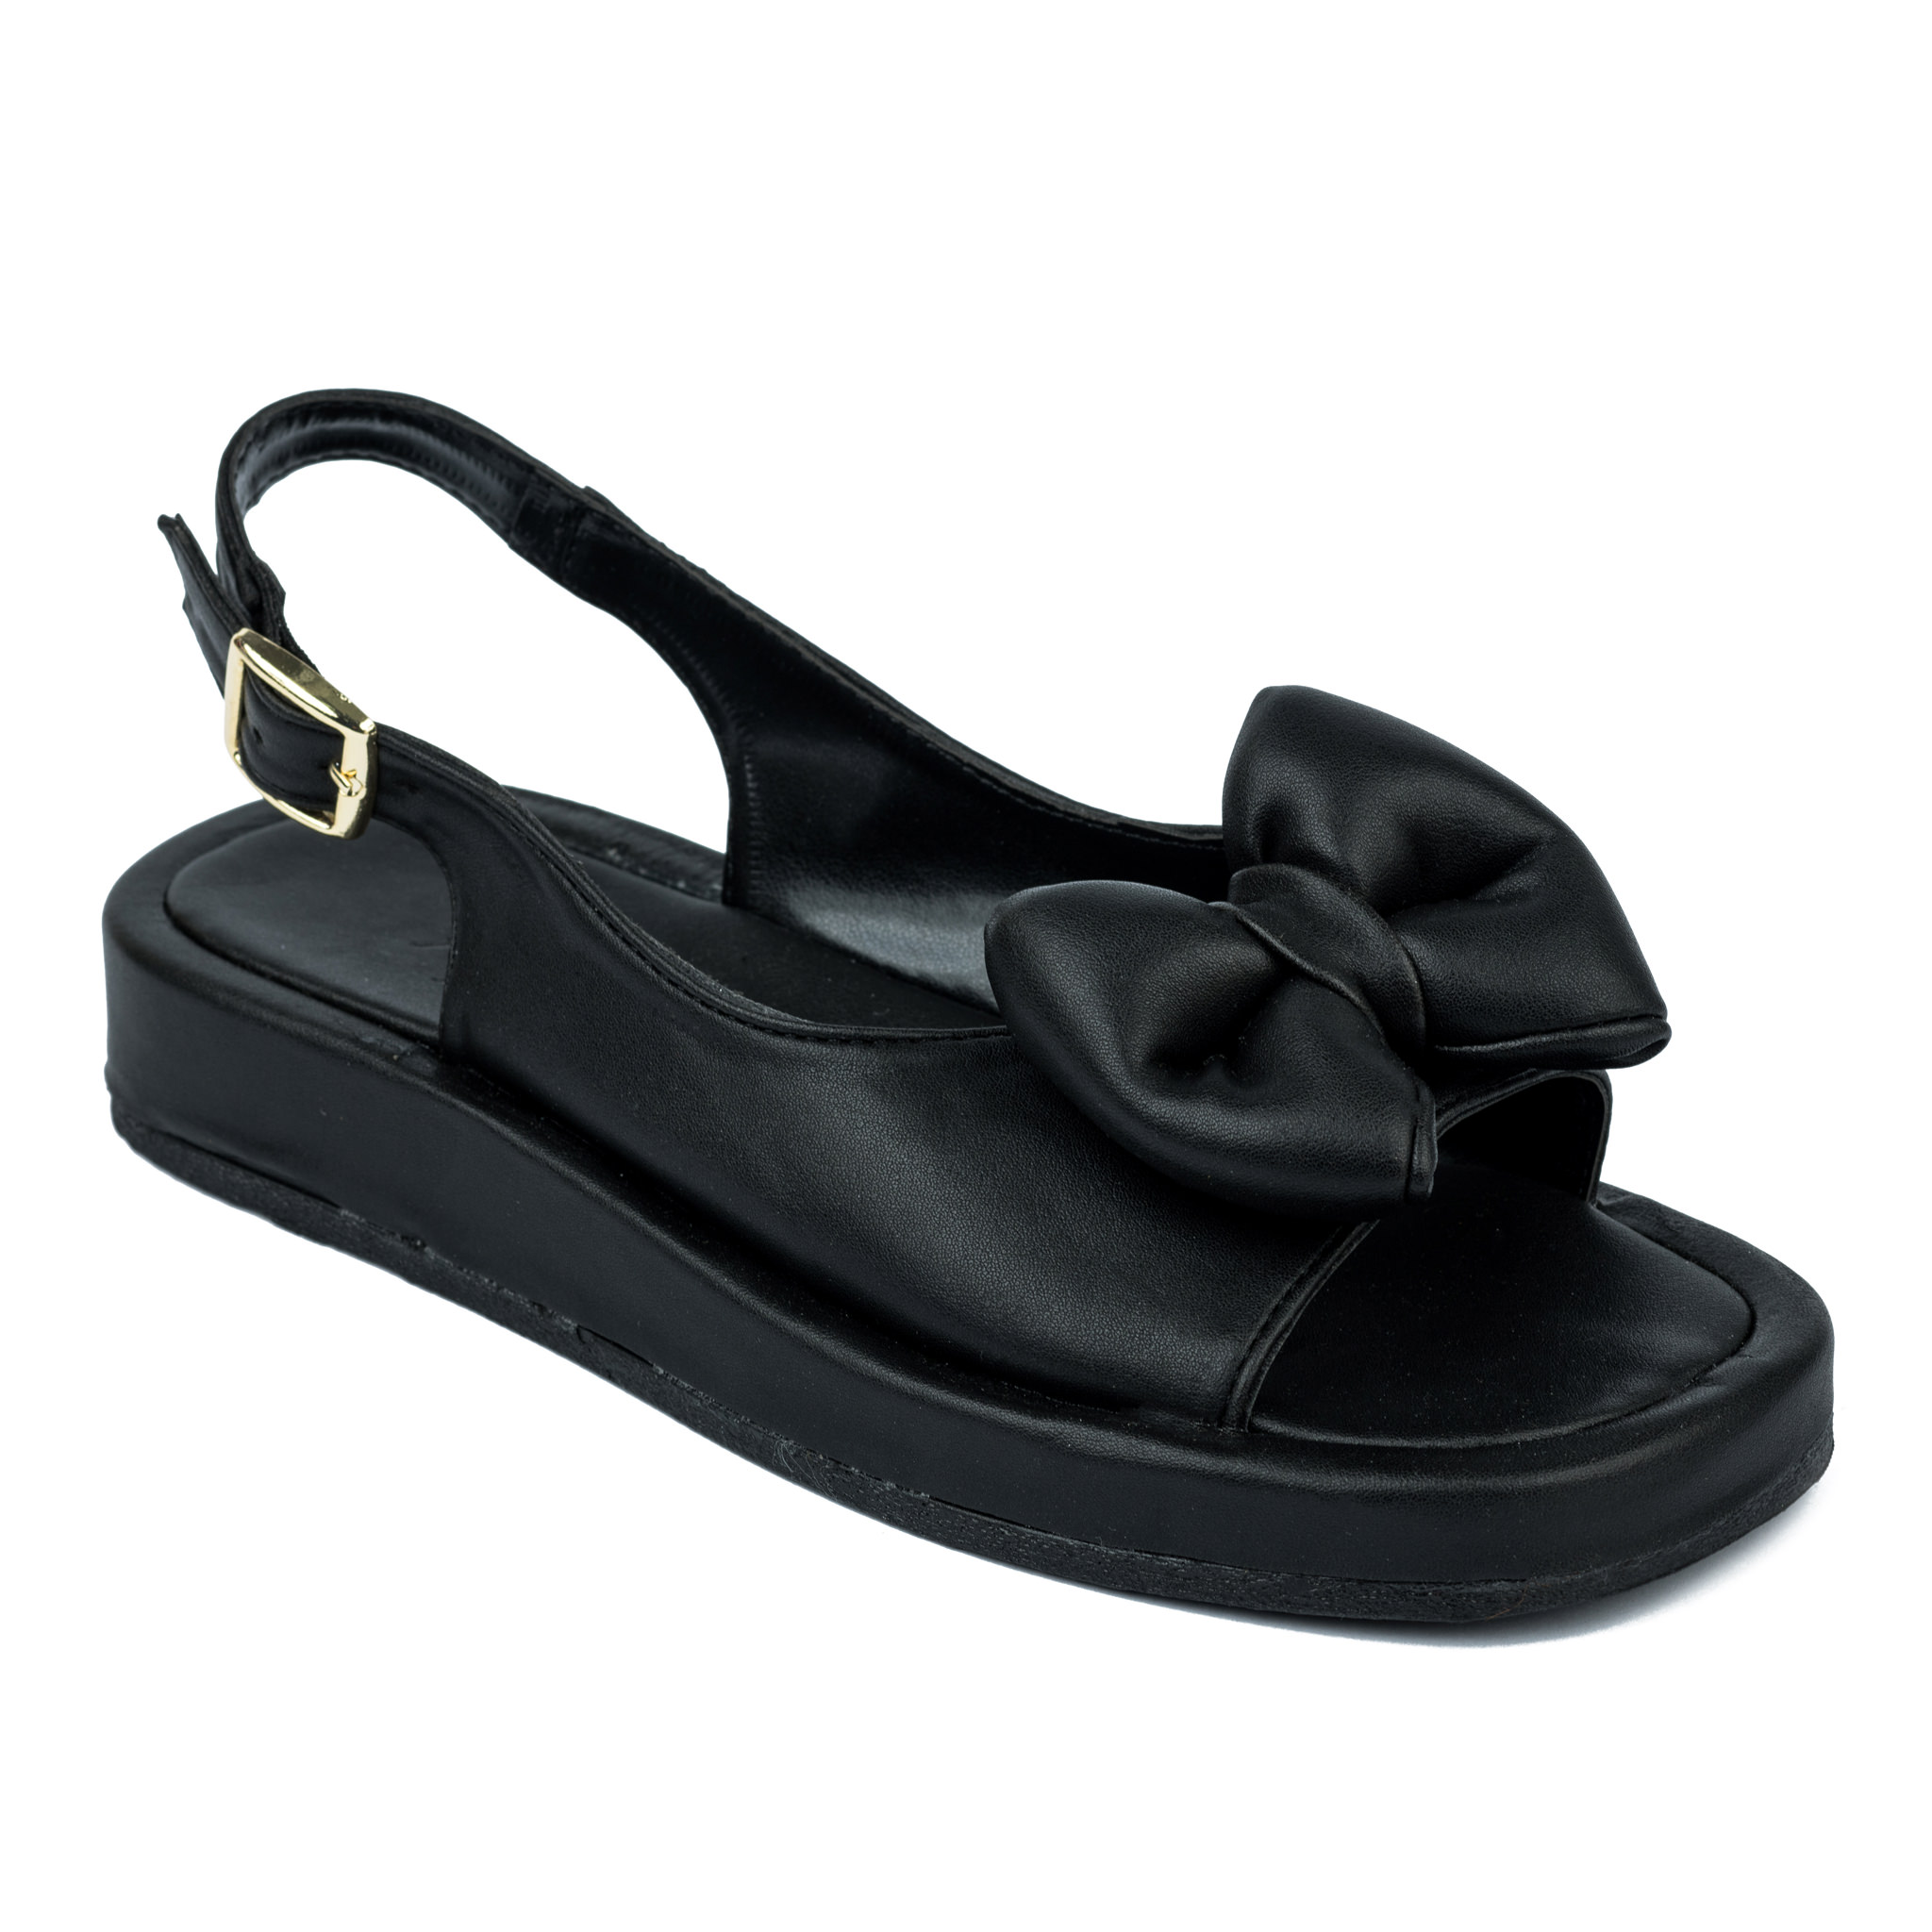 Women sandals A475 - BLACK